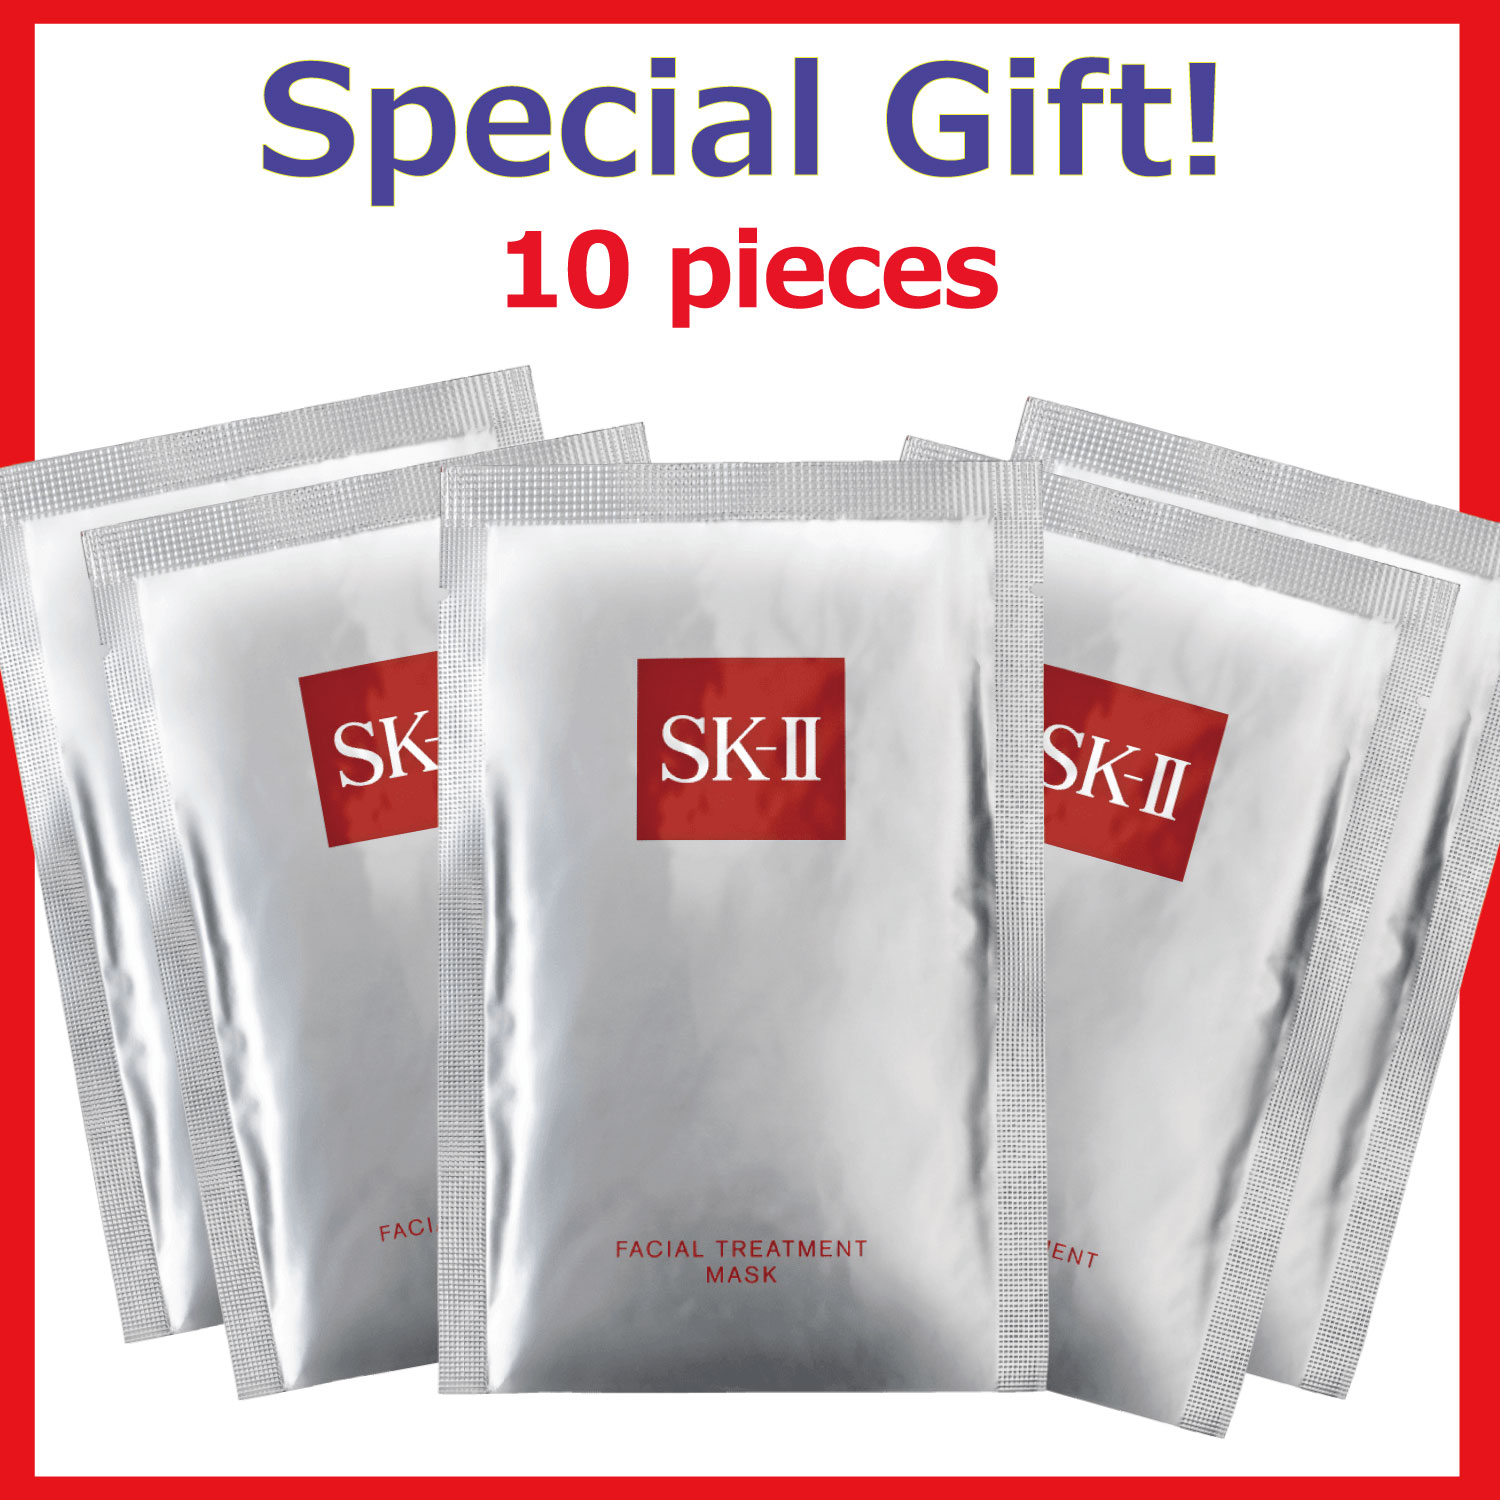 HANEDA【SK-II】Gift with-purchase offer! 